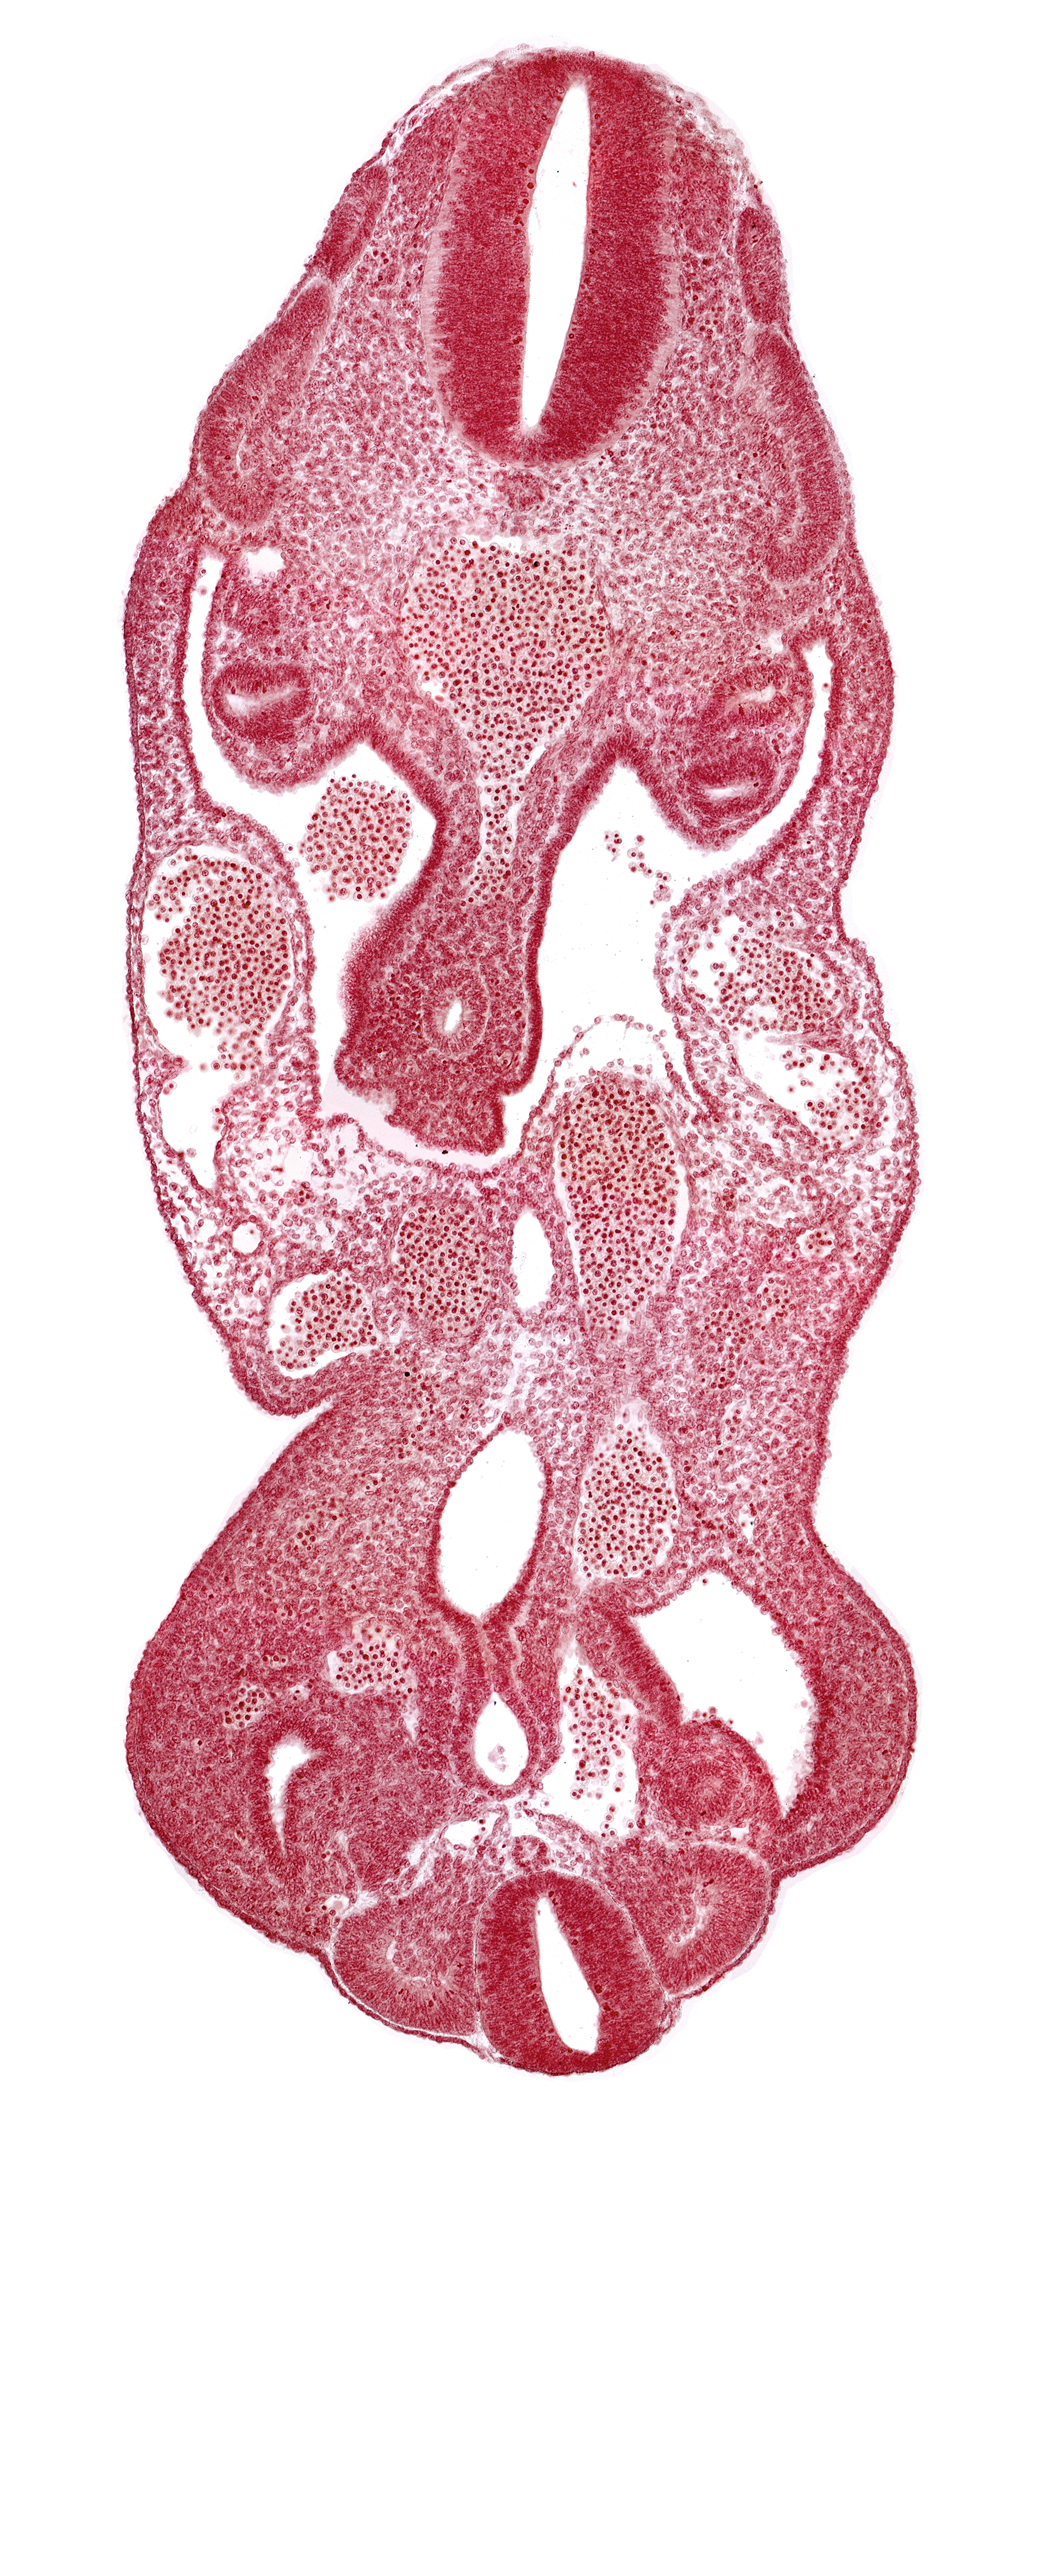 T-1 spinal ganglion primordium, allantois, aorta, coelom, dermatomyotome 13 (T-1), dermatomyotome 14 (T-2), dermatomyotome 27 (L-3), gonadal epithelium, hindgut, left common iliac artery, left umbilical artery, lower limb bud, mesonephric ridge, neural canal, notochord, origin of primary intestinal plexus artery, rectum primordium, sclerotome, urogenital sinus, urorectal septum